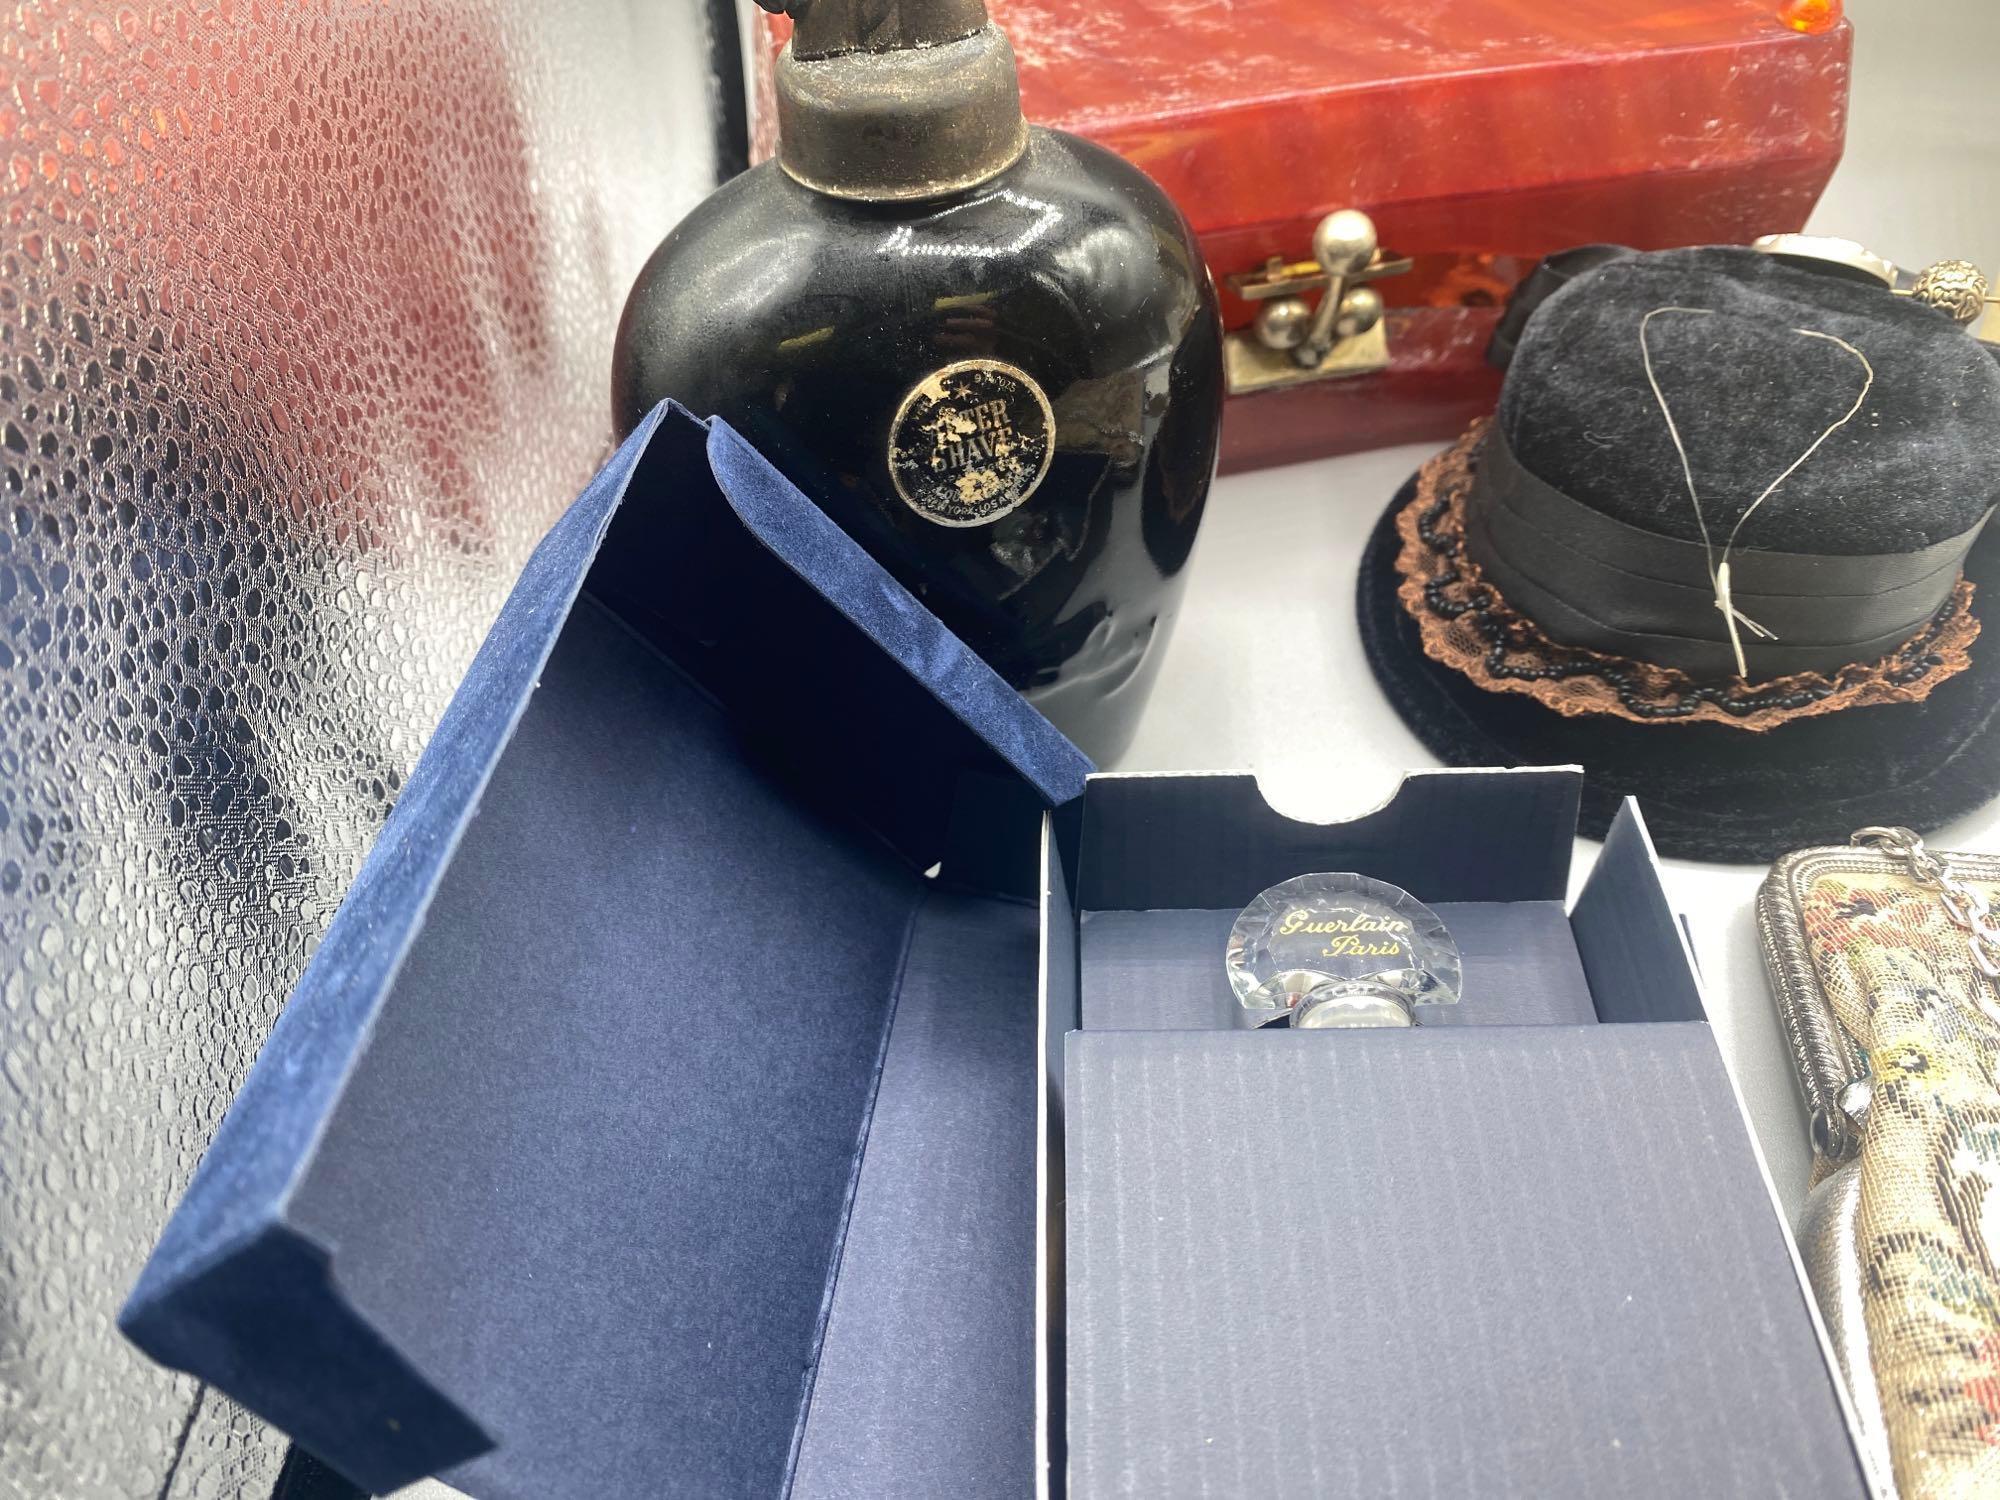 Vintage Perfume Bottles, Purses, hat pins